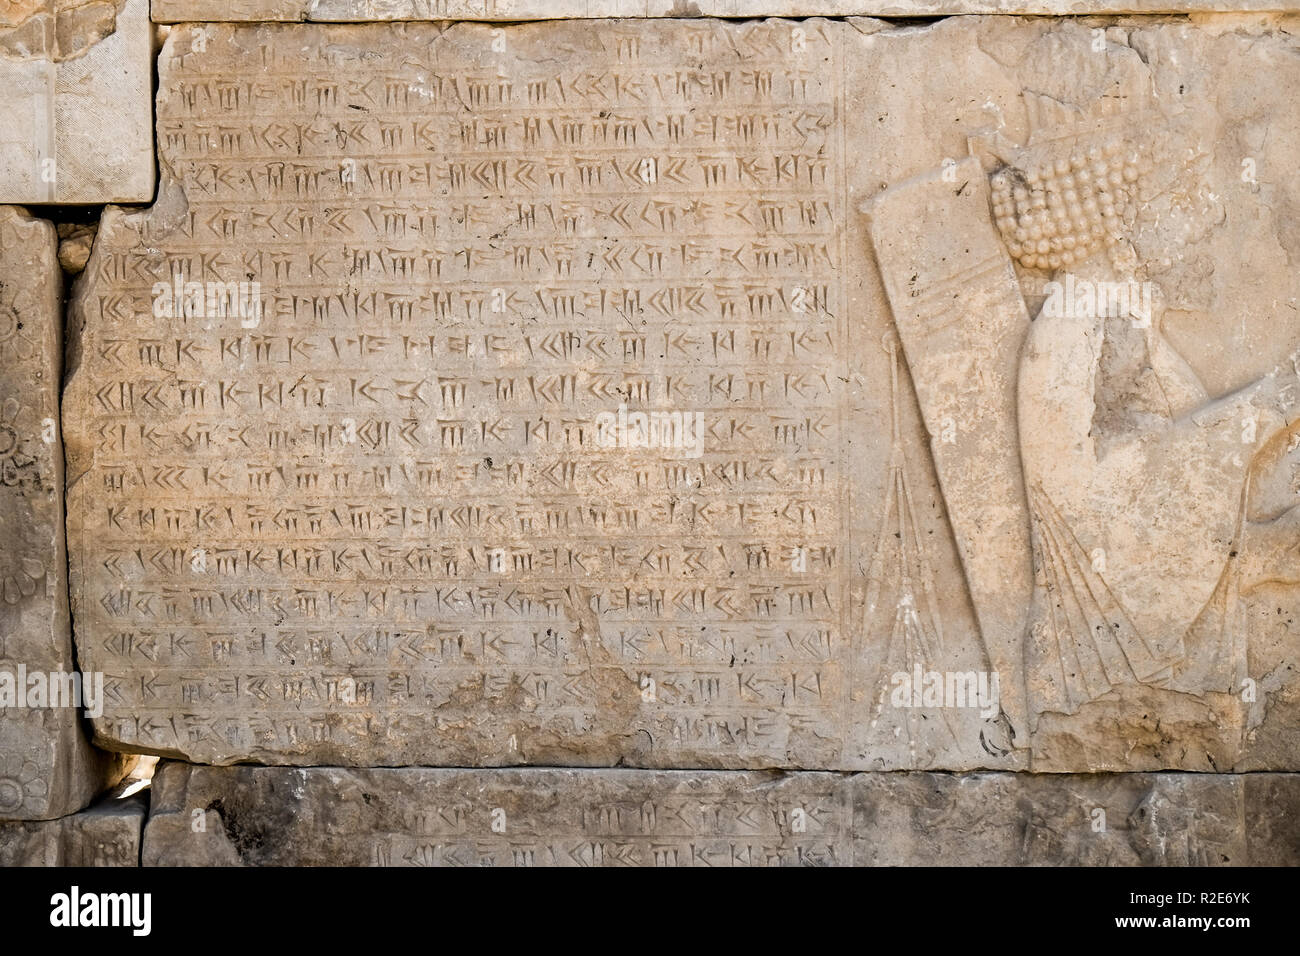 Antica iscrizione cuneiforme a Persepoli, Iran. Foto Stock